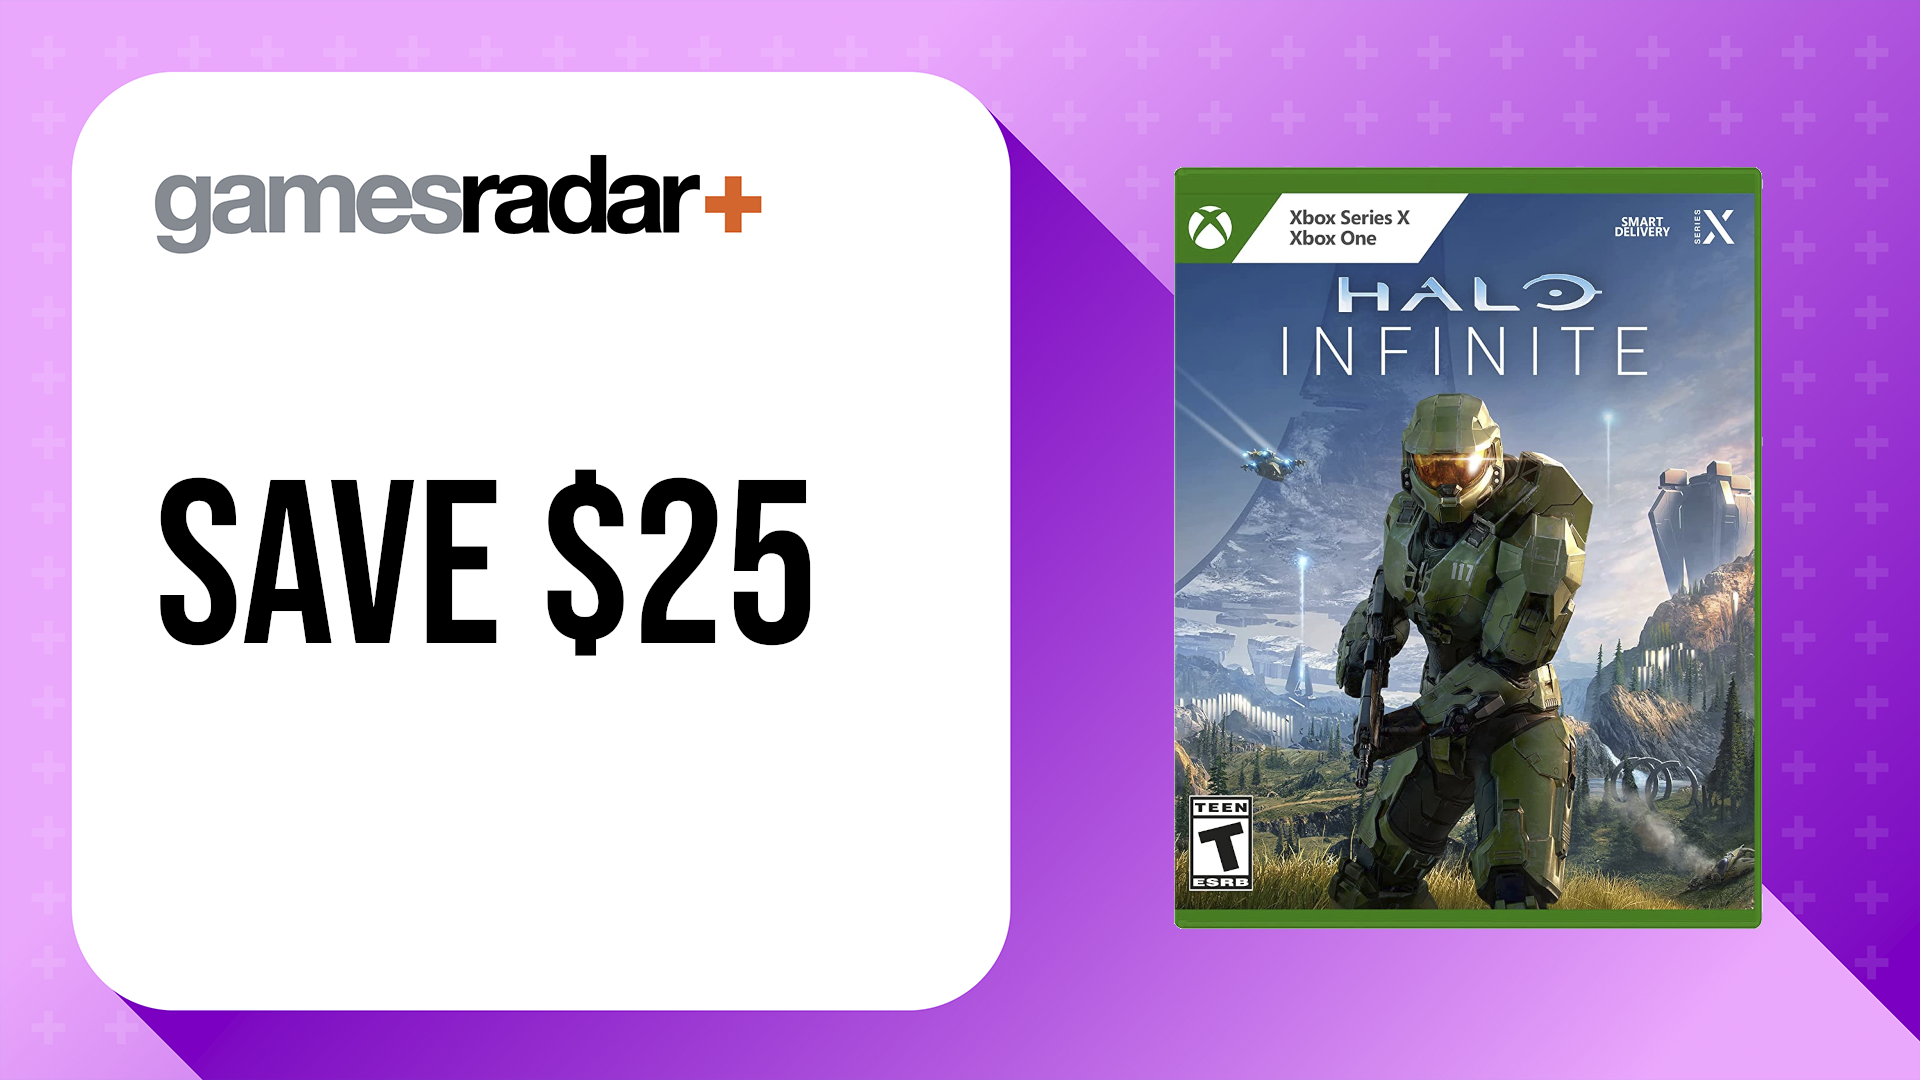 Halo Infinite: Standard Edition deals